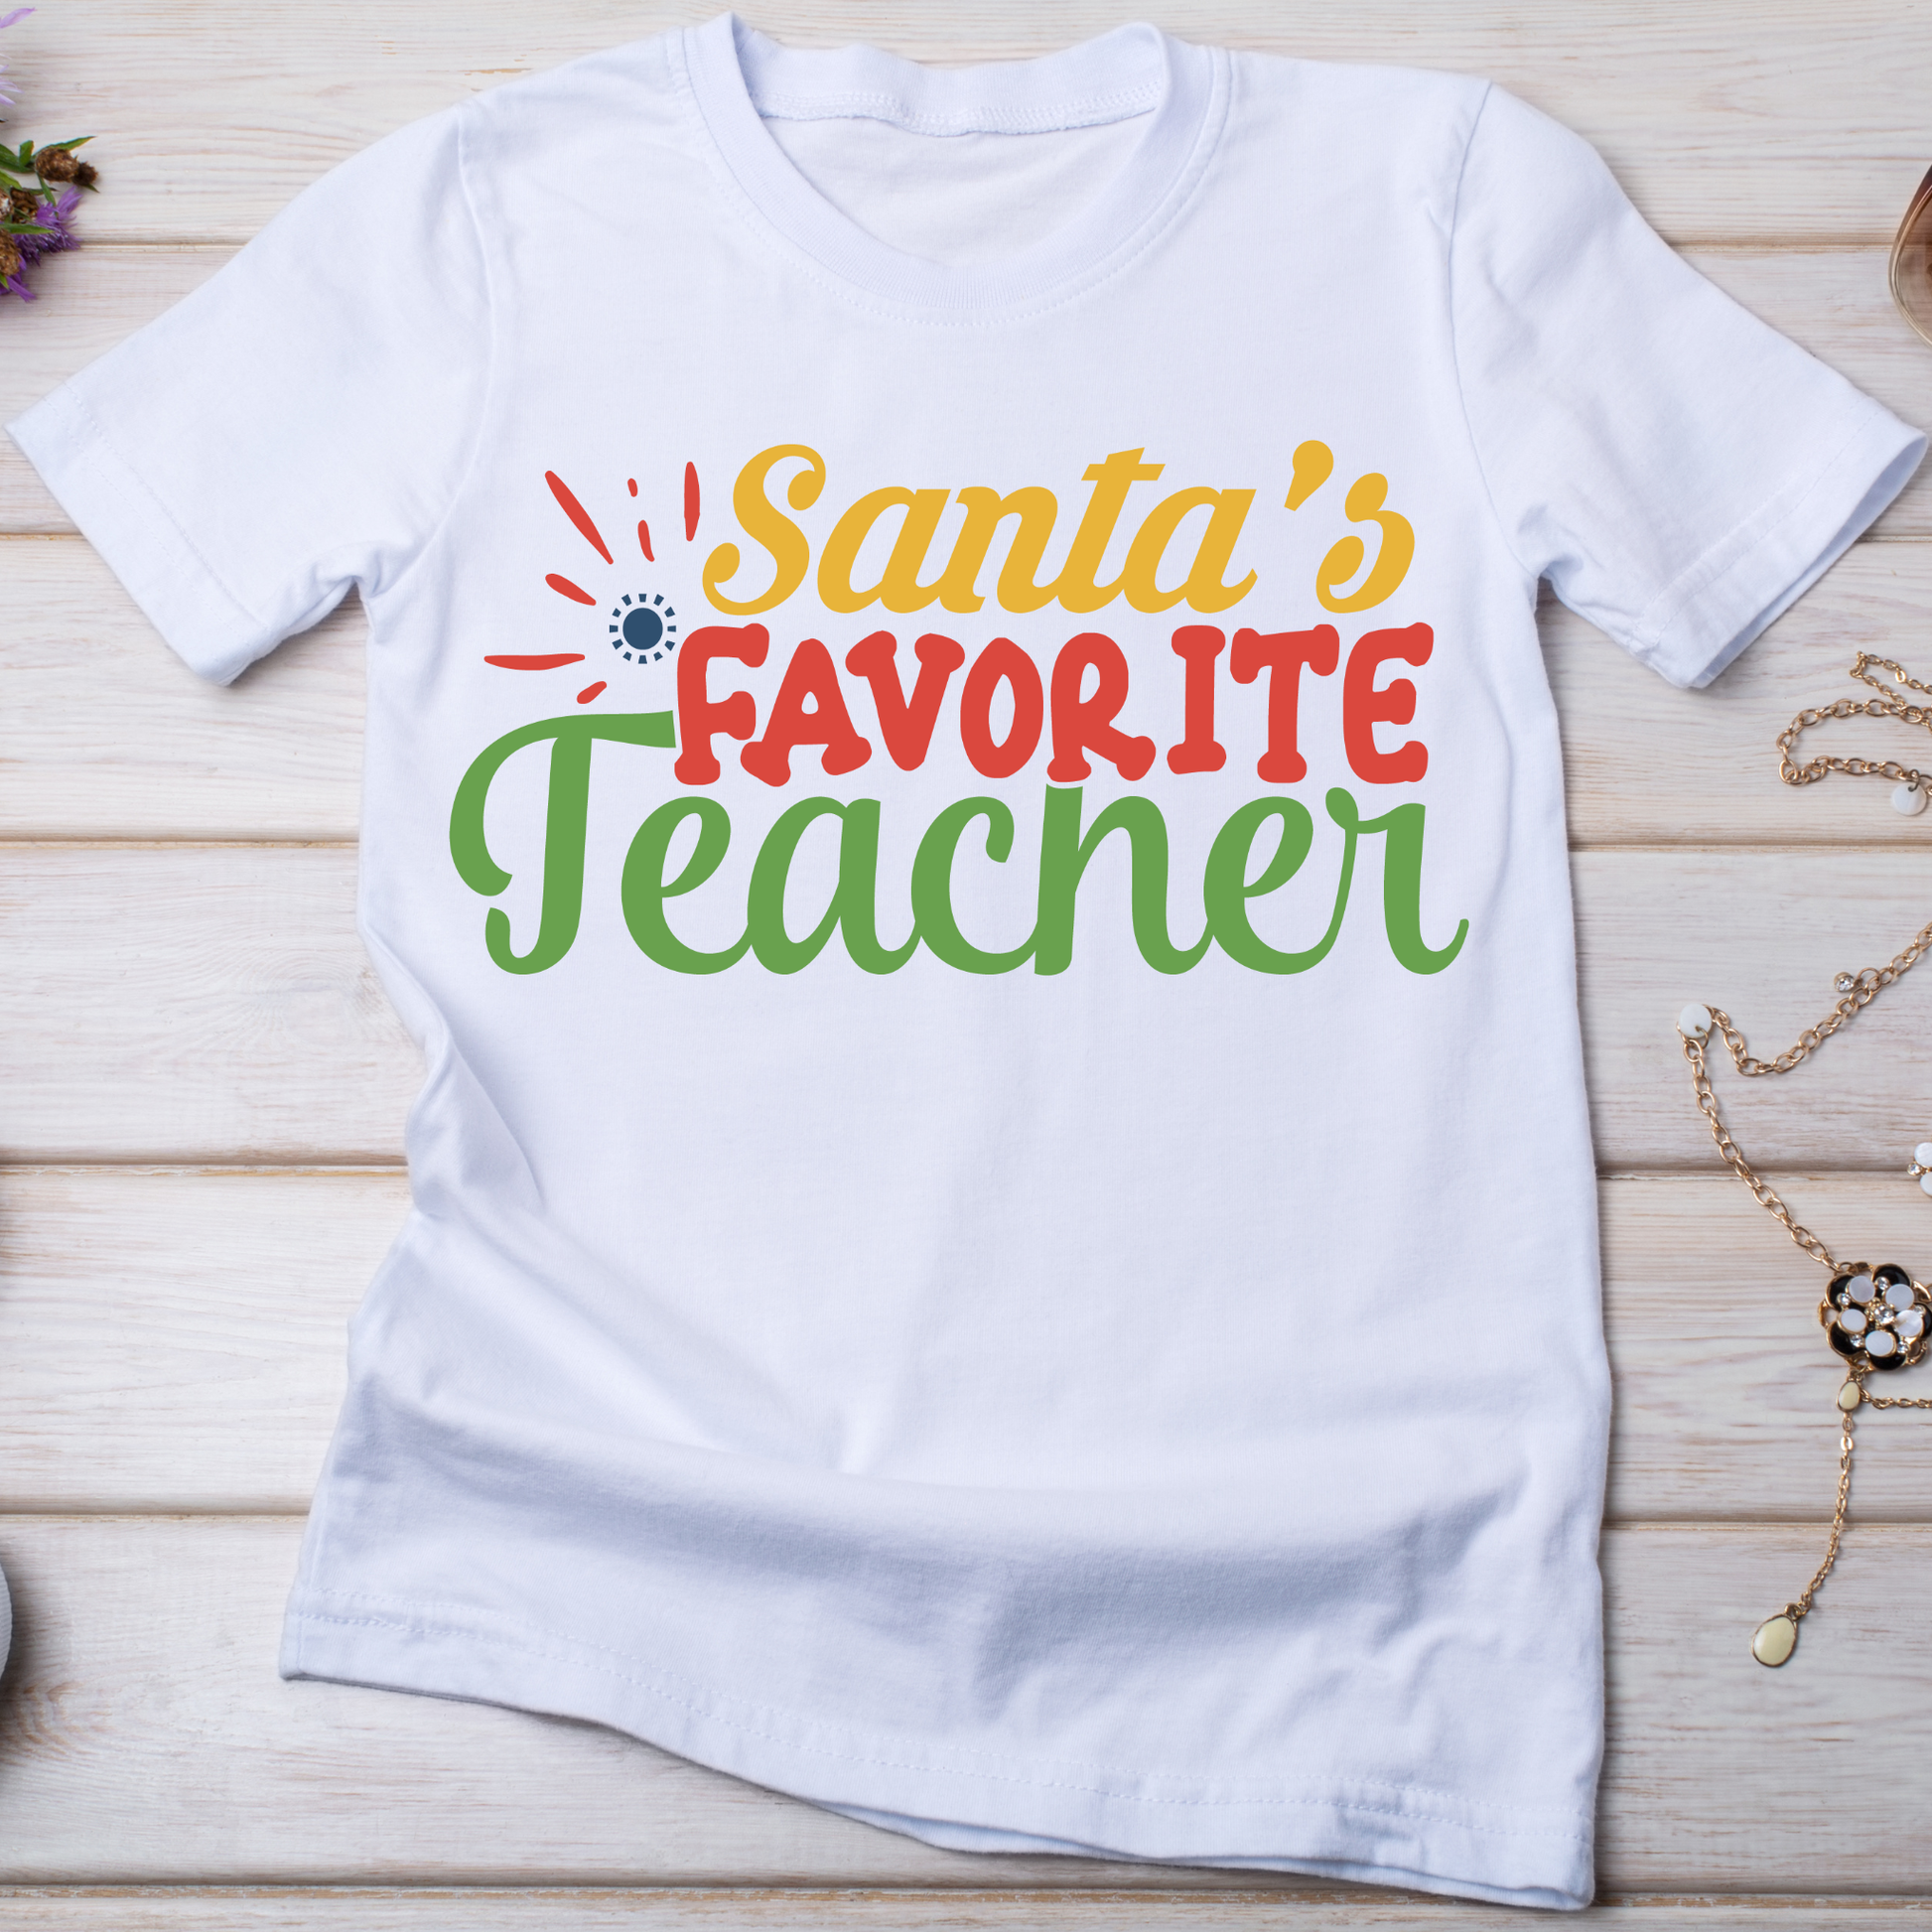 Santas favorite teacher trendy Women's Christmas t-shirt - Premium t-shirt from Lees Krazy Teez - Just $19.95! Shop now at Lees Krazy Teez